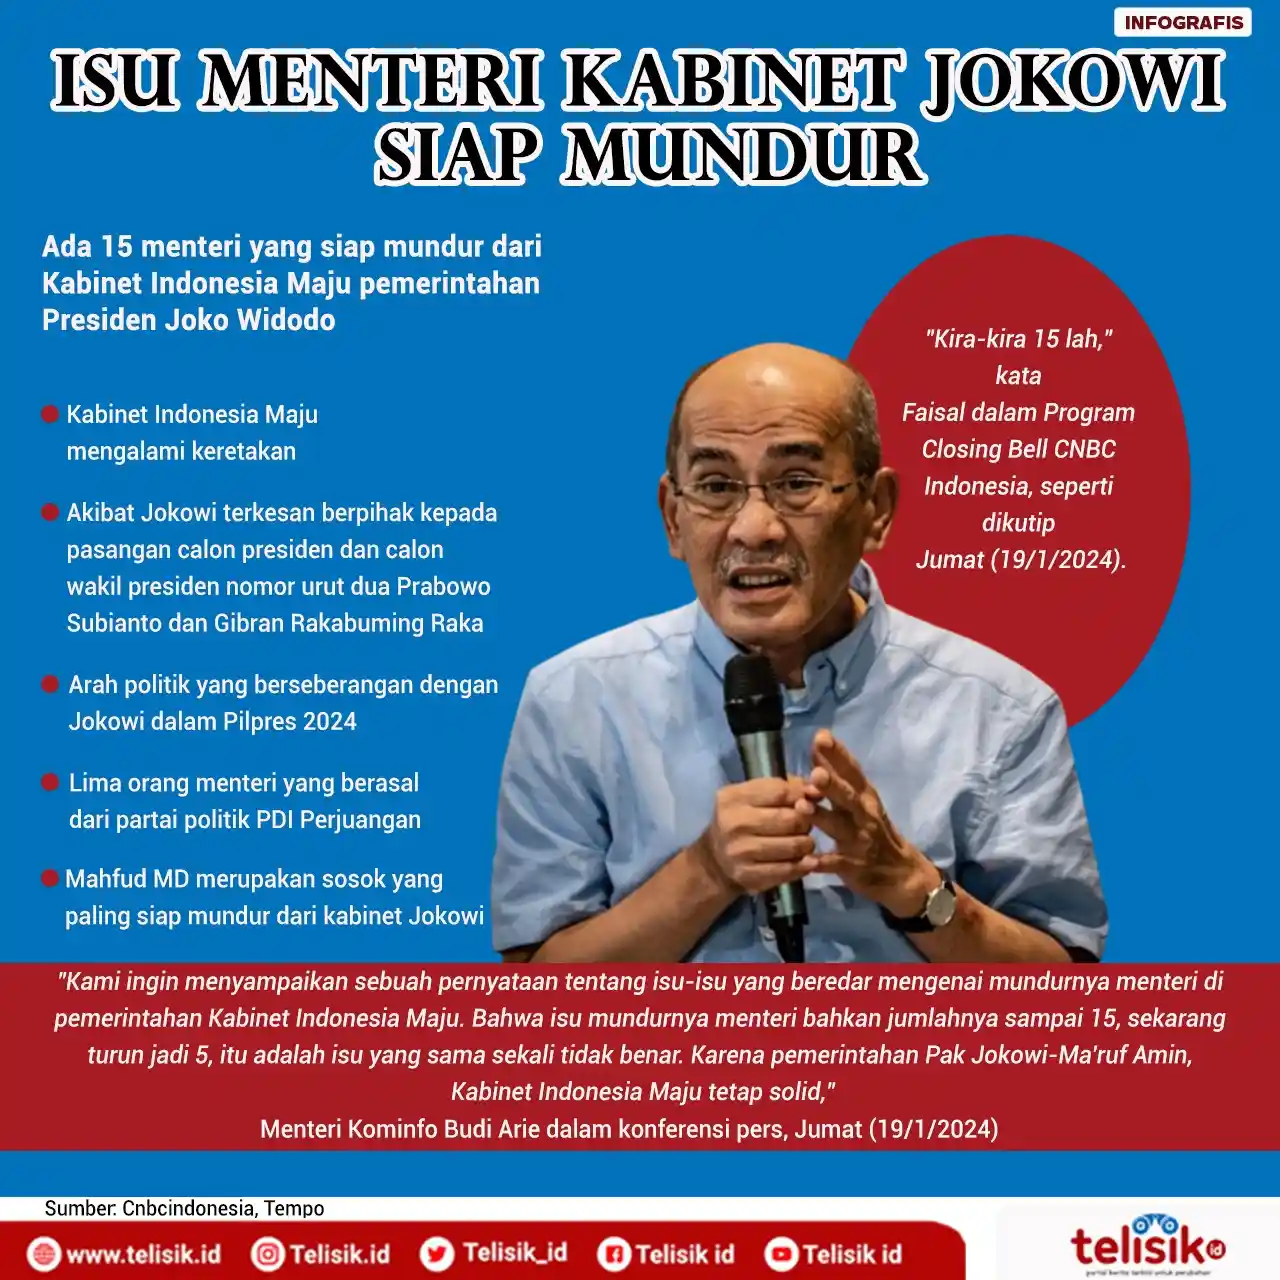 Infografis: Isu Menteri Kabinet Jokowi Siap Mundur